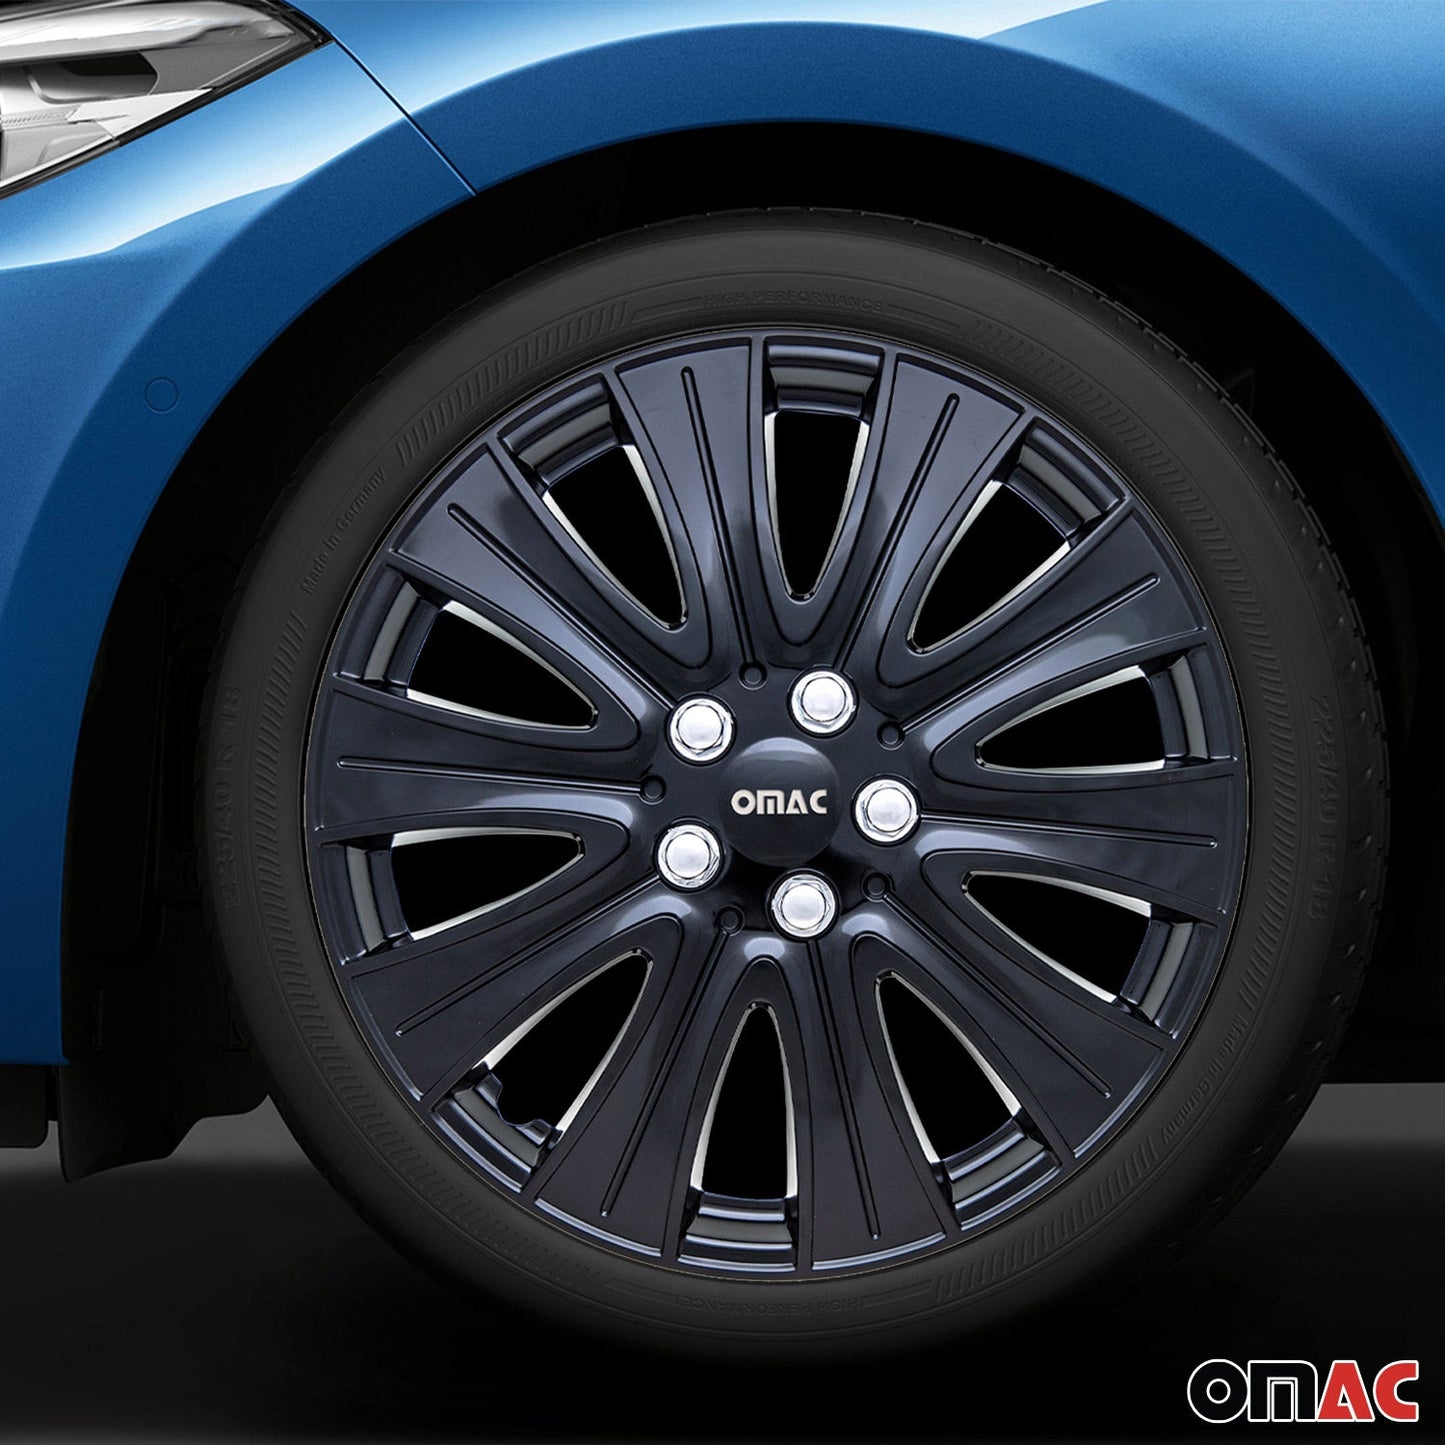 OMAC 15" Wheel Covers Guard Hub Caps Durable Snap On ABS Gloss Black Silver 4x OMAC-WE40-GBK15